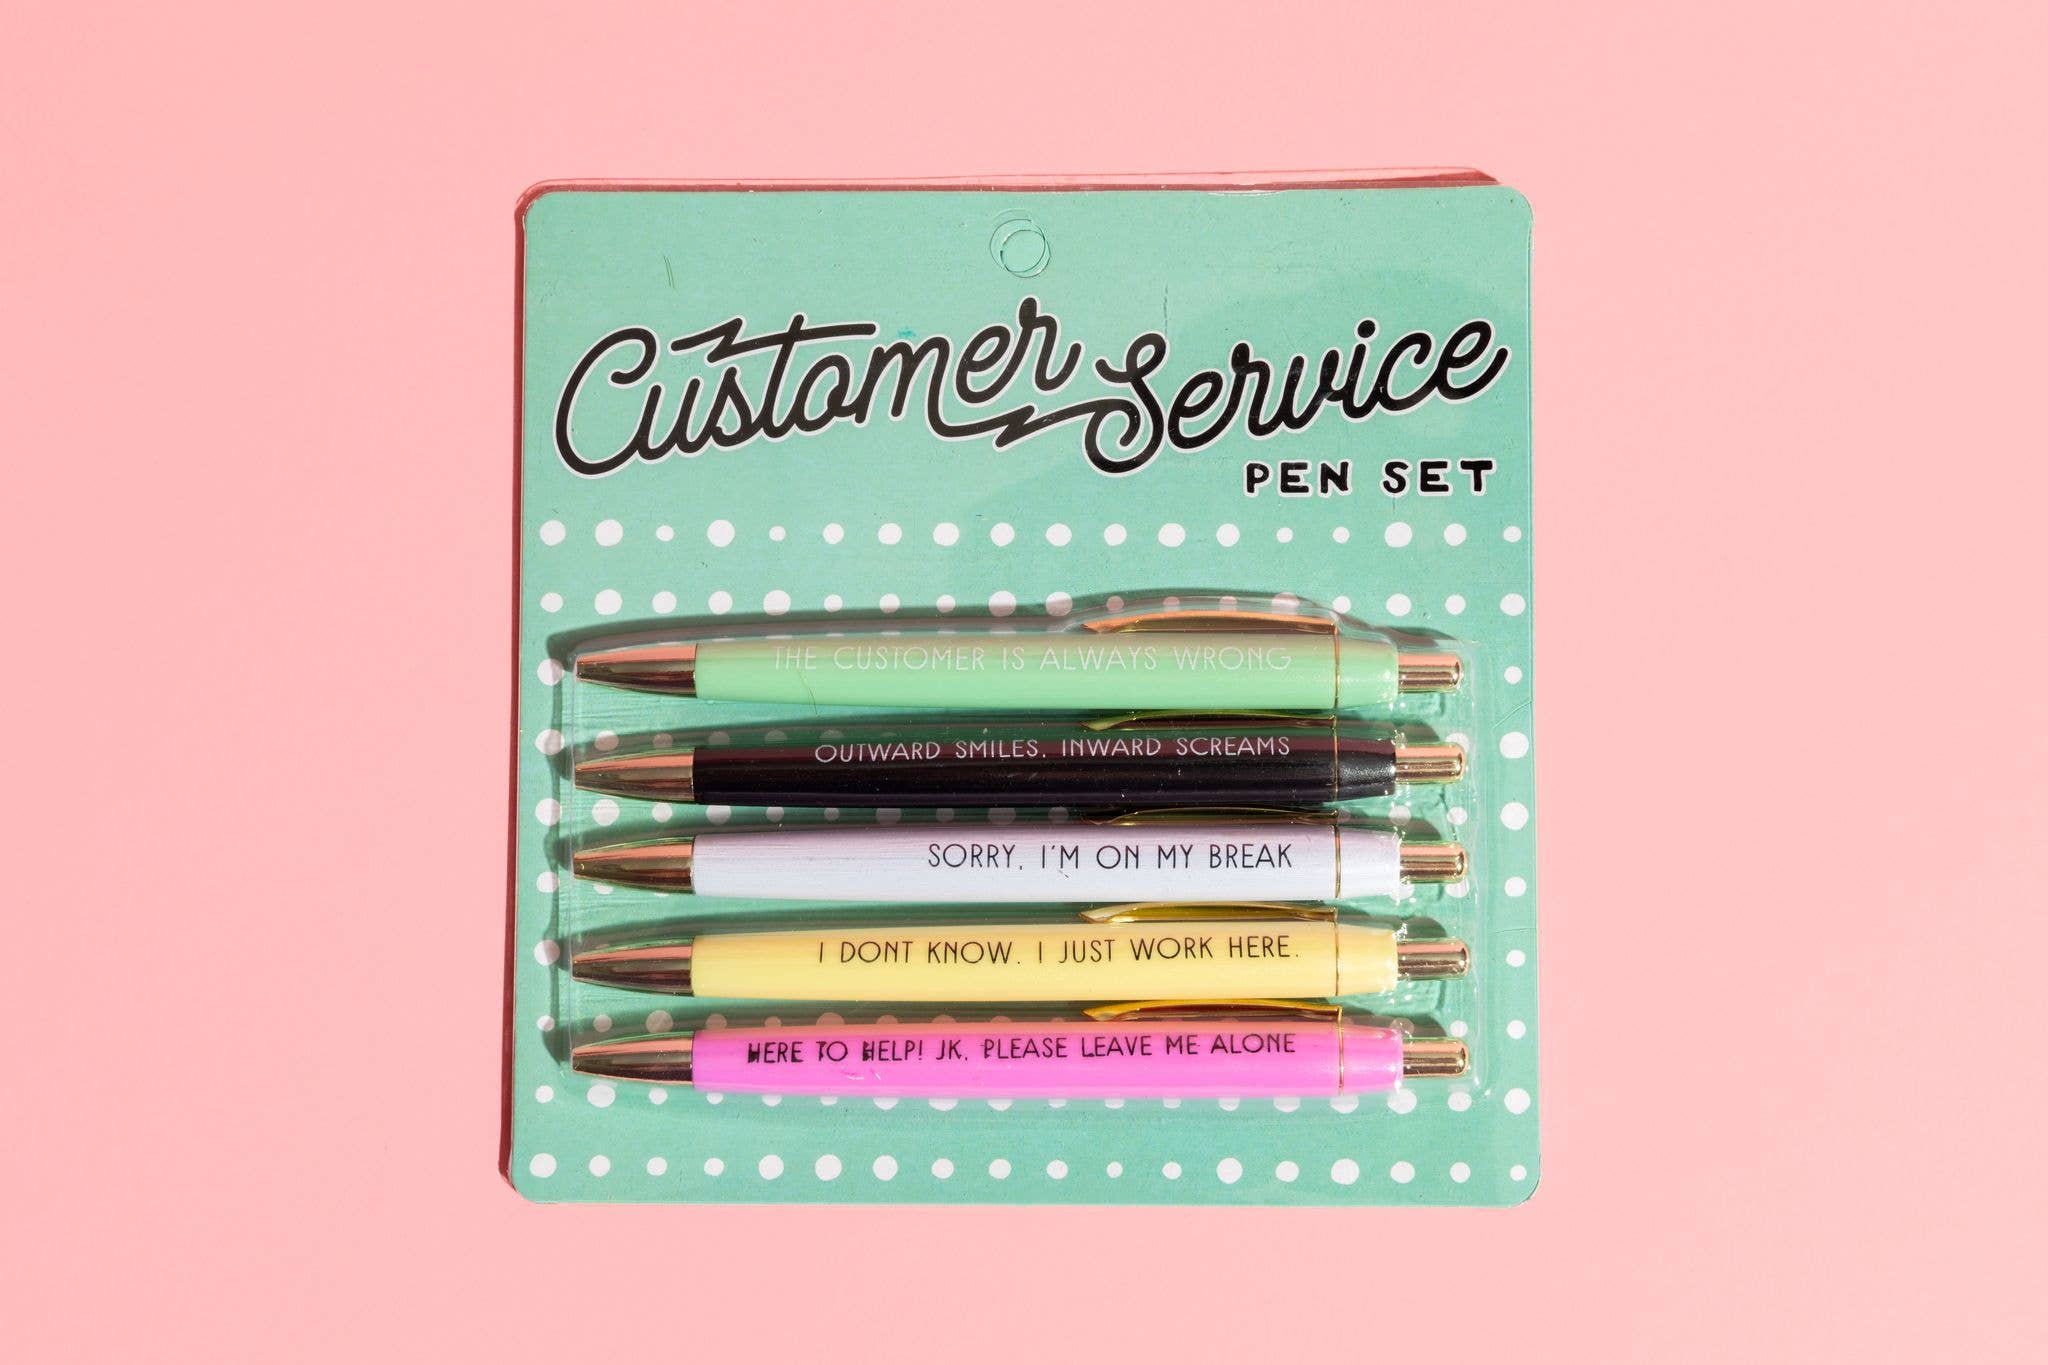 FUN CLUB - Customer Service Pen Set